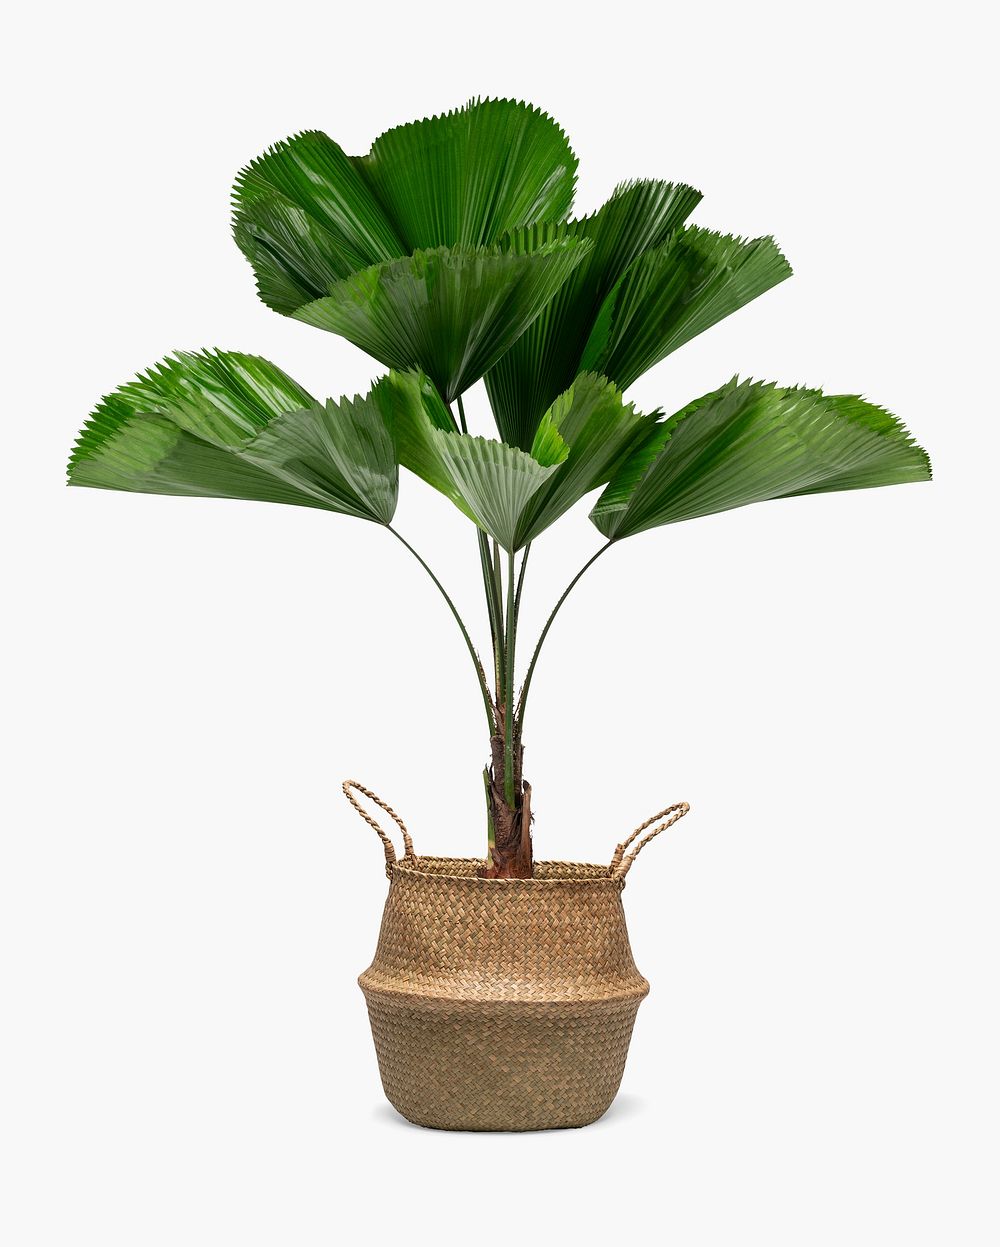 Ruffled leaf palm mockup psd in a rattan basket